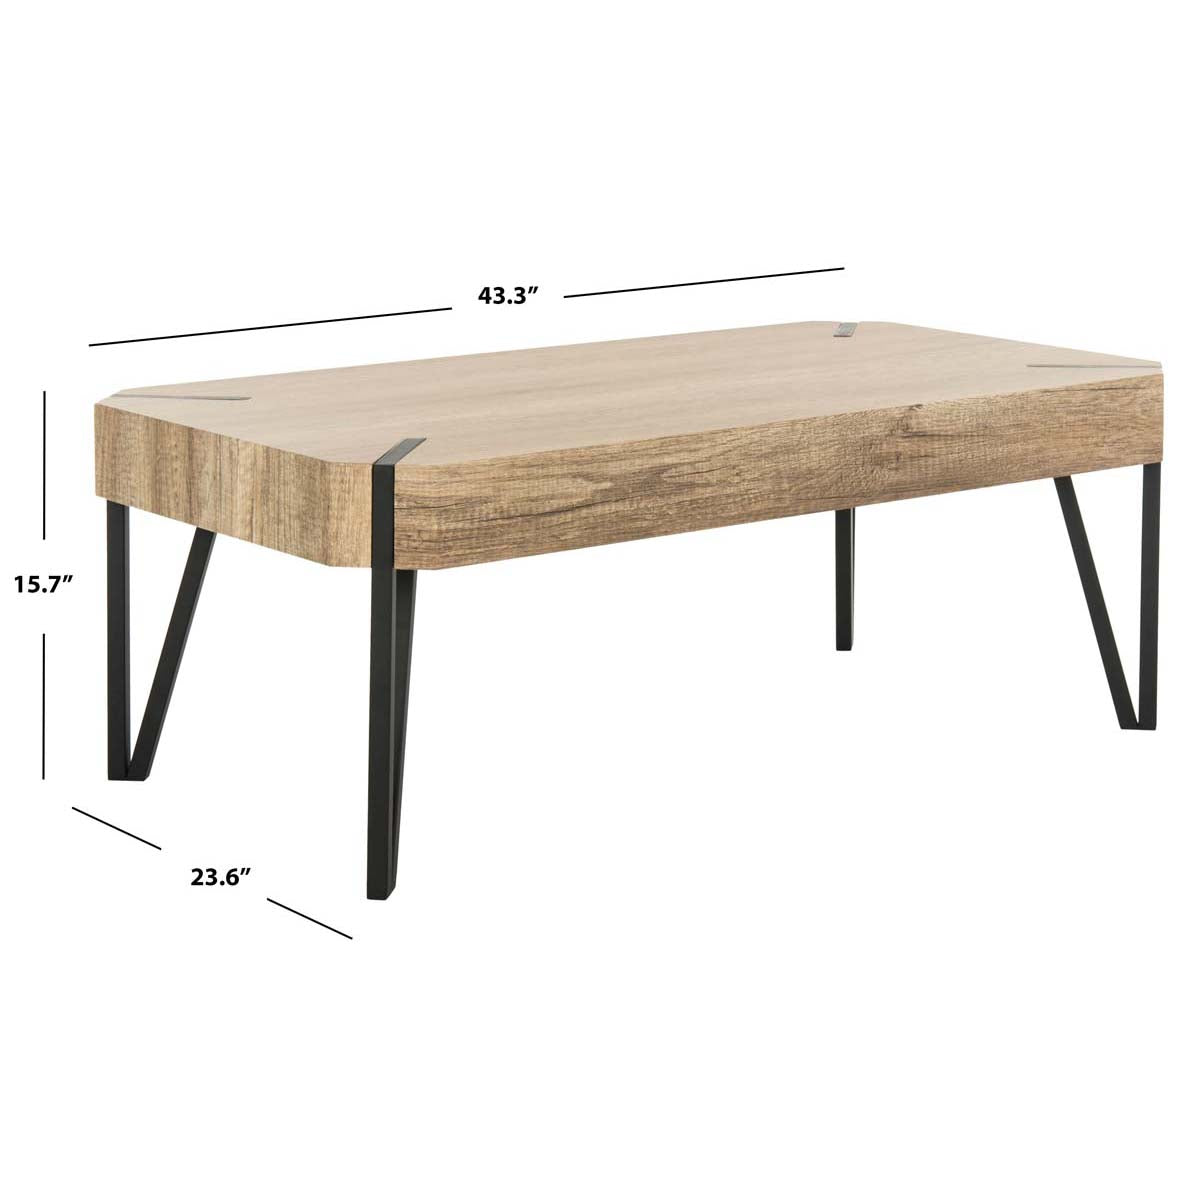 Safavieh Liann Rustic Midcentury Wood Top Coffee Table , COF7003